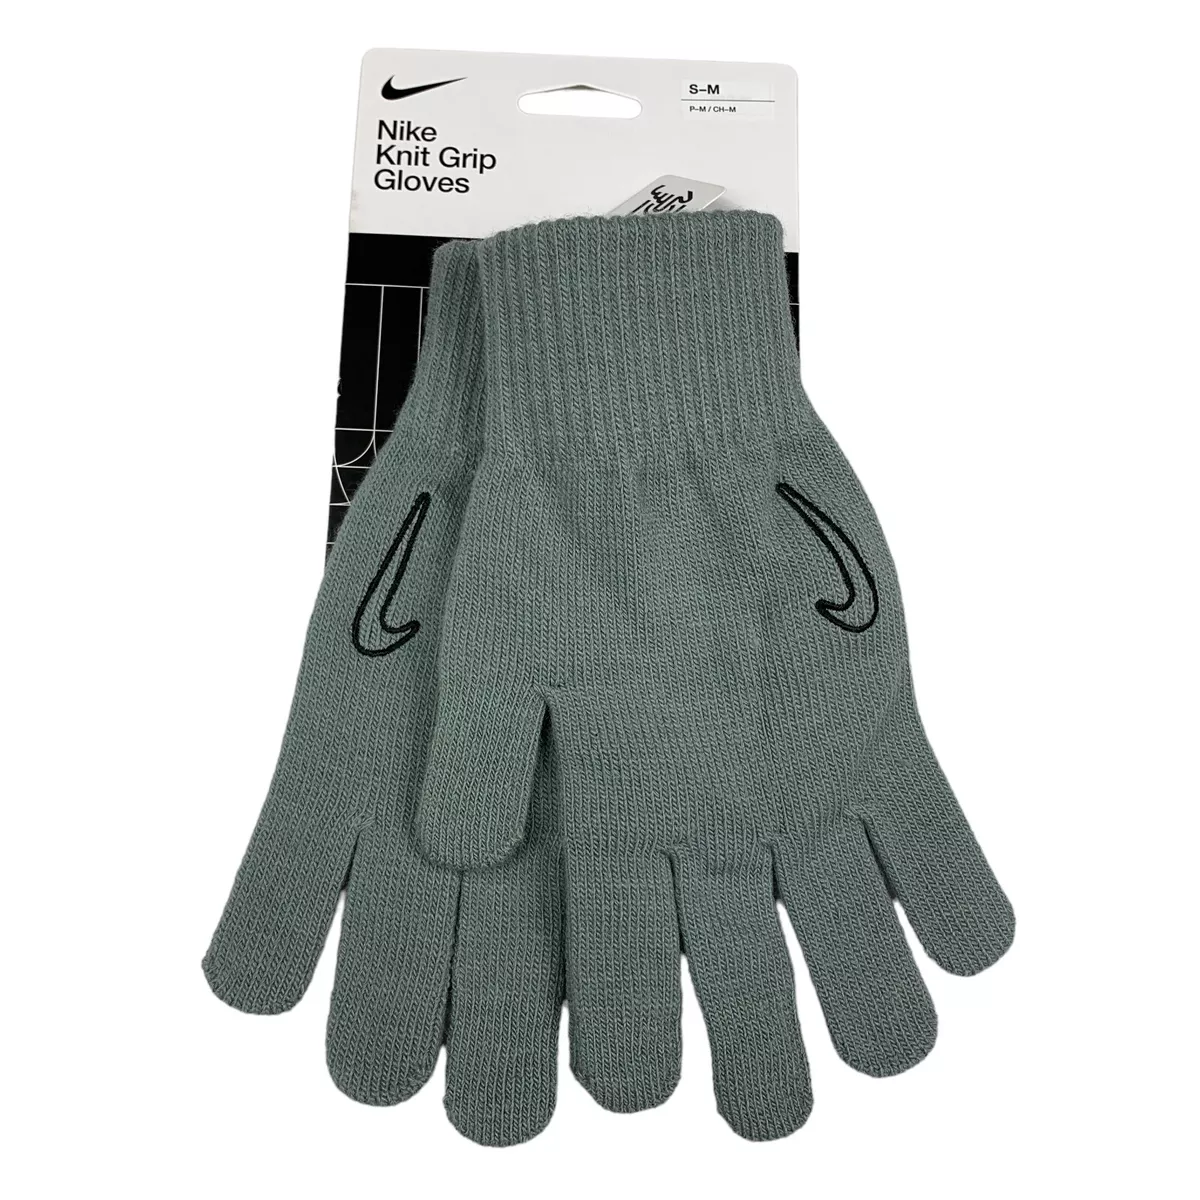 Mens Knit Tech Grip 2.0 Gloves Gray S/M | eBay